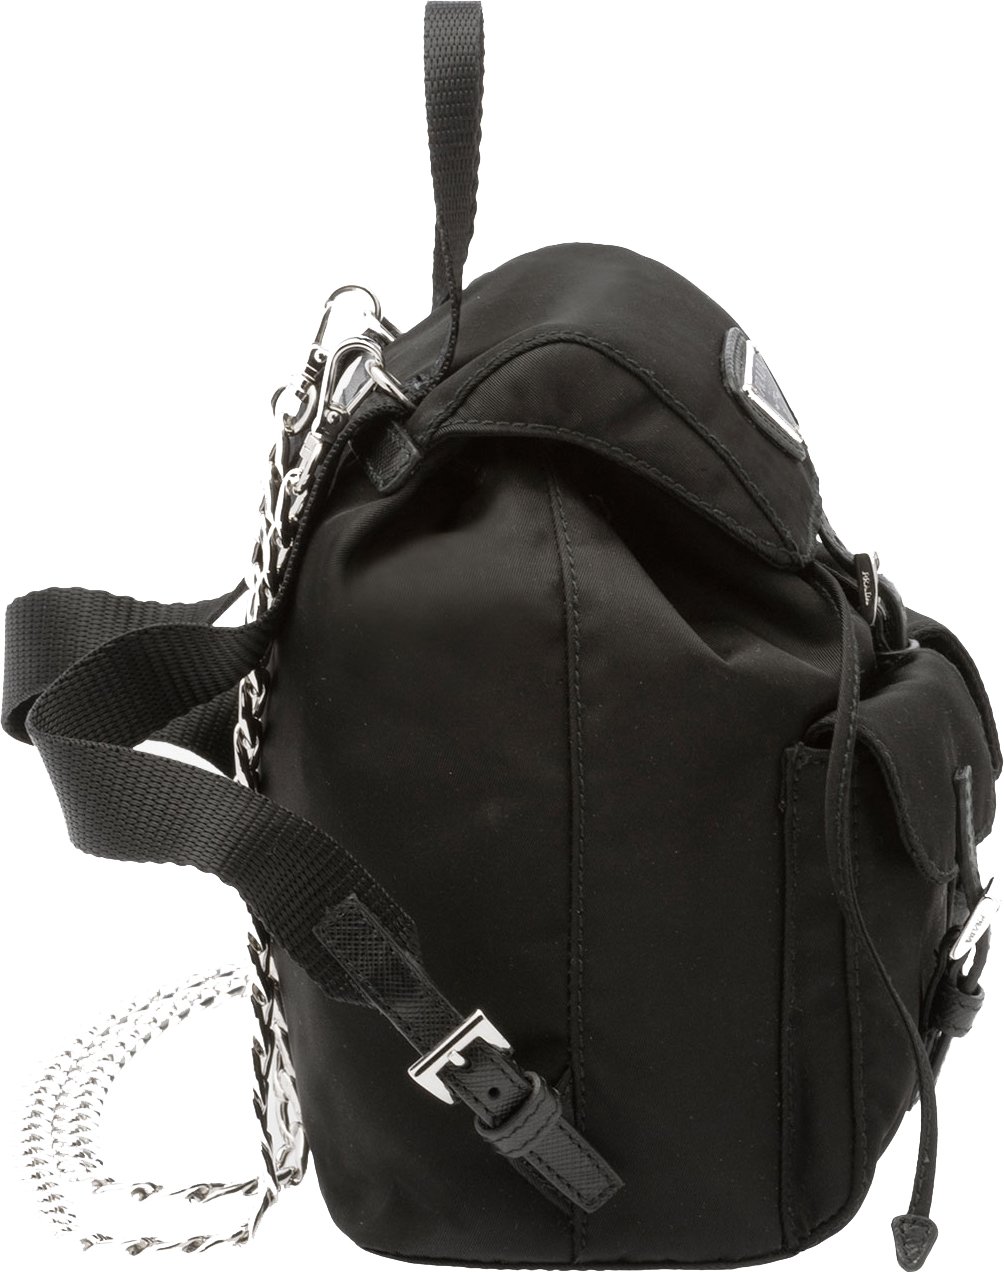 prada vela mini crossbody backpack bag